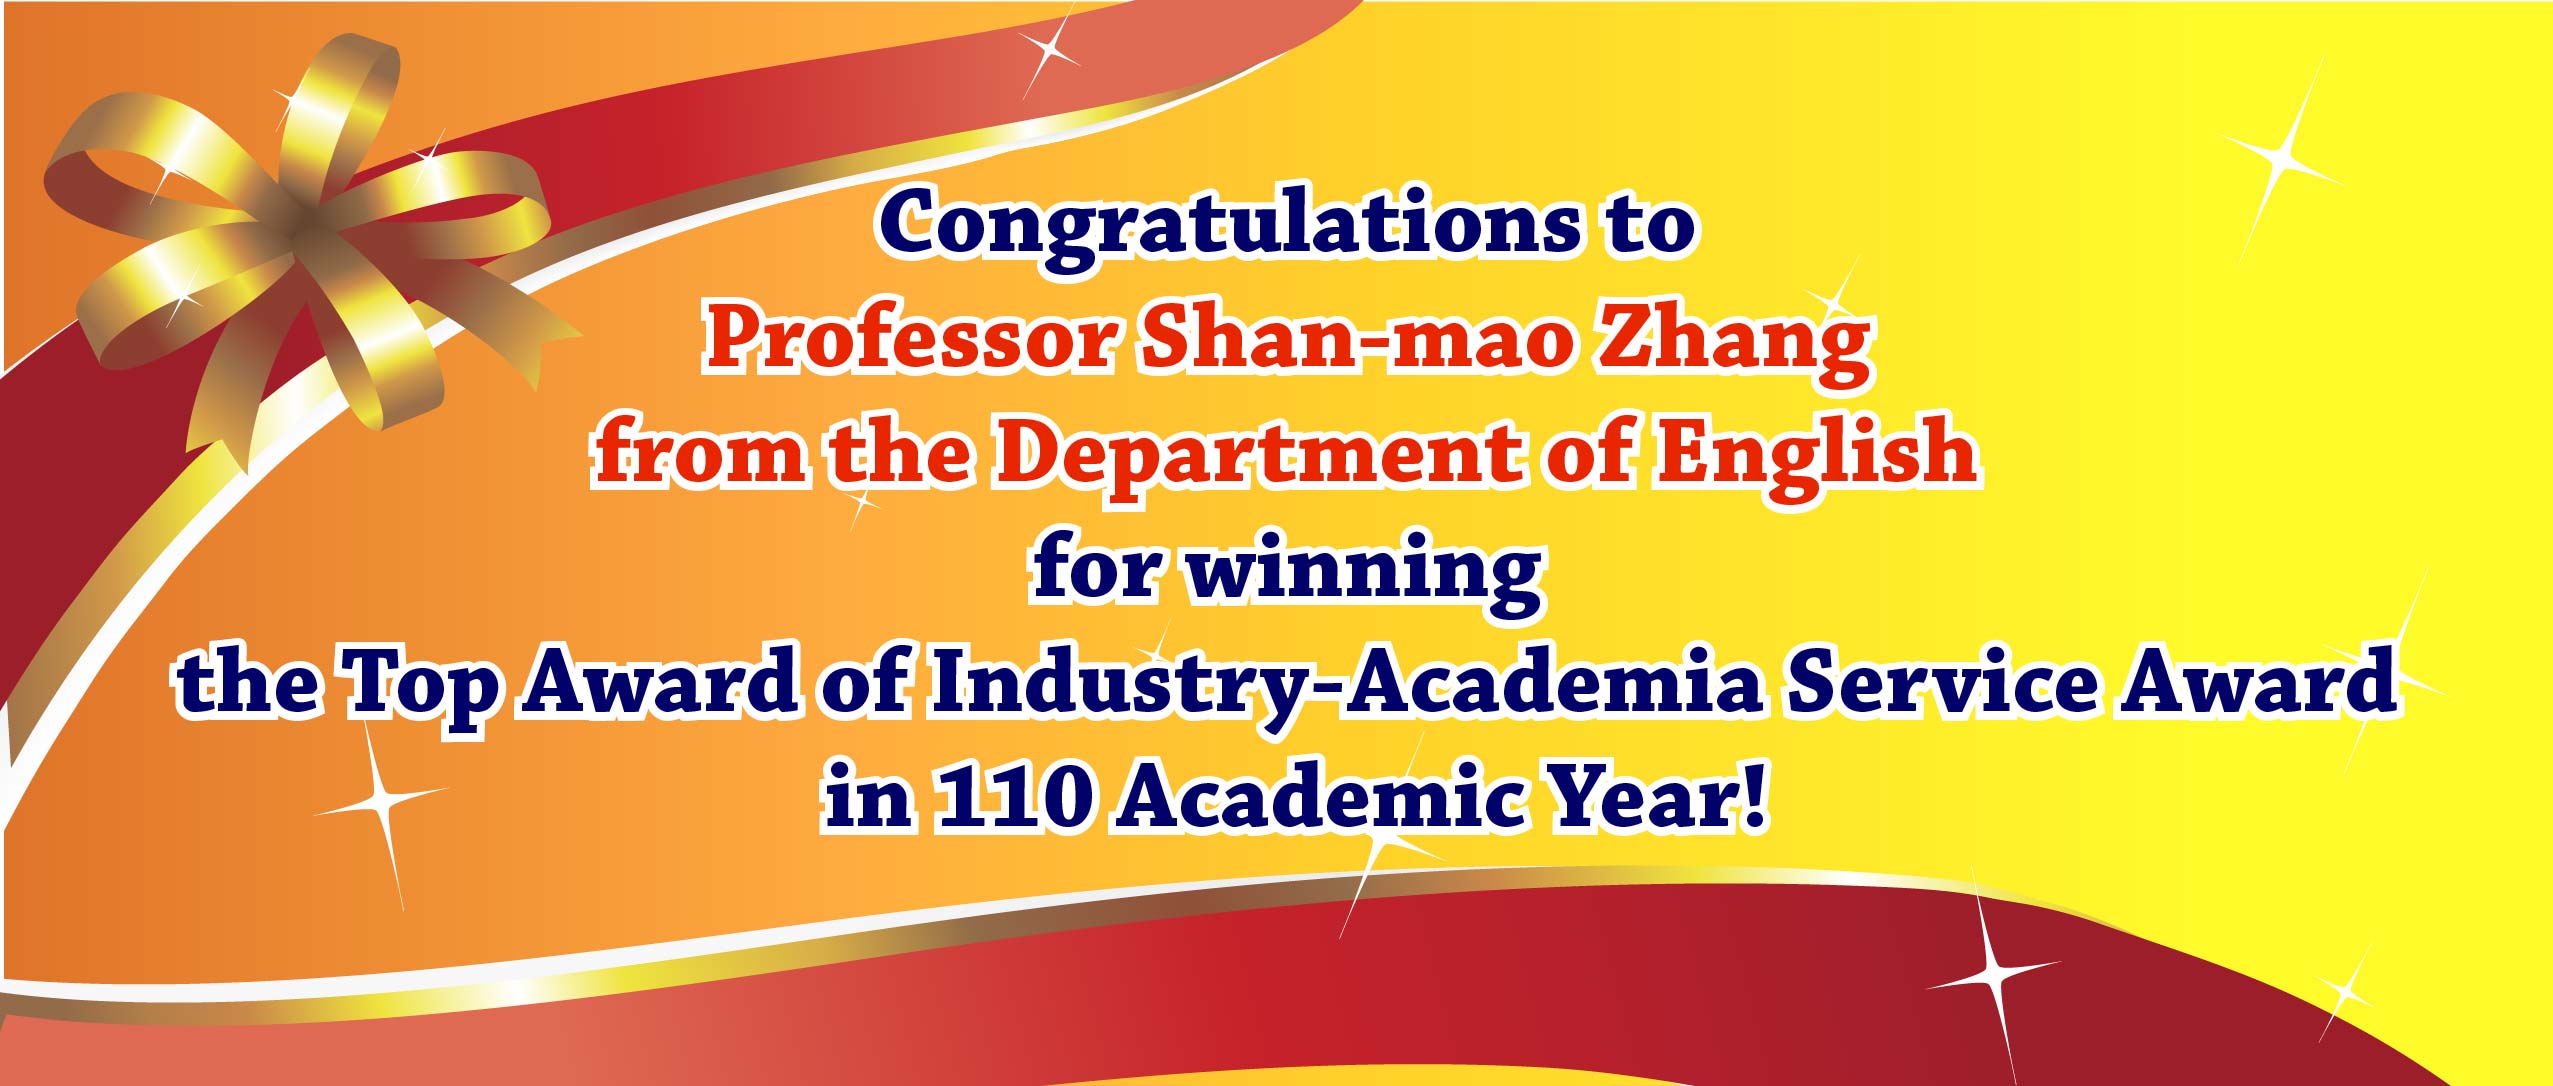 Top Award of Industry-Academia Service Award in 110 Academic Year